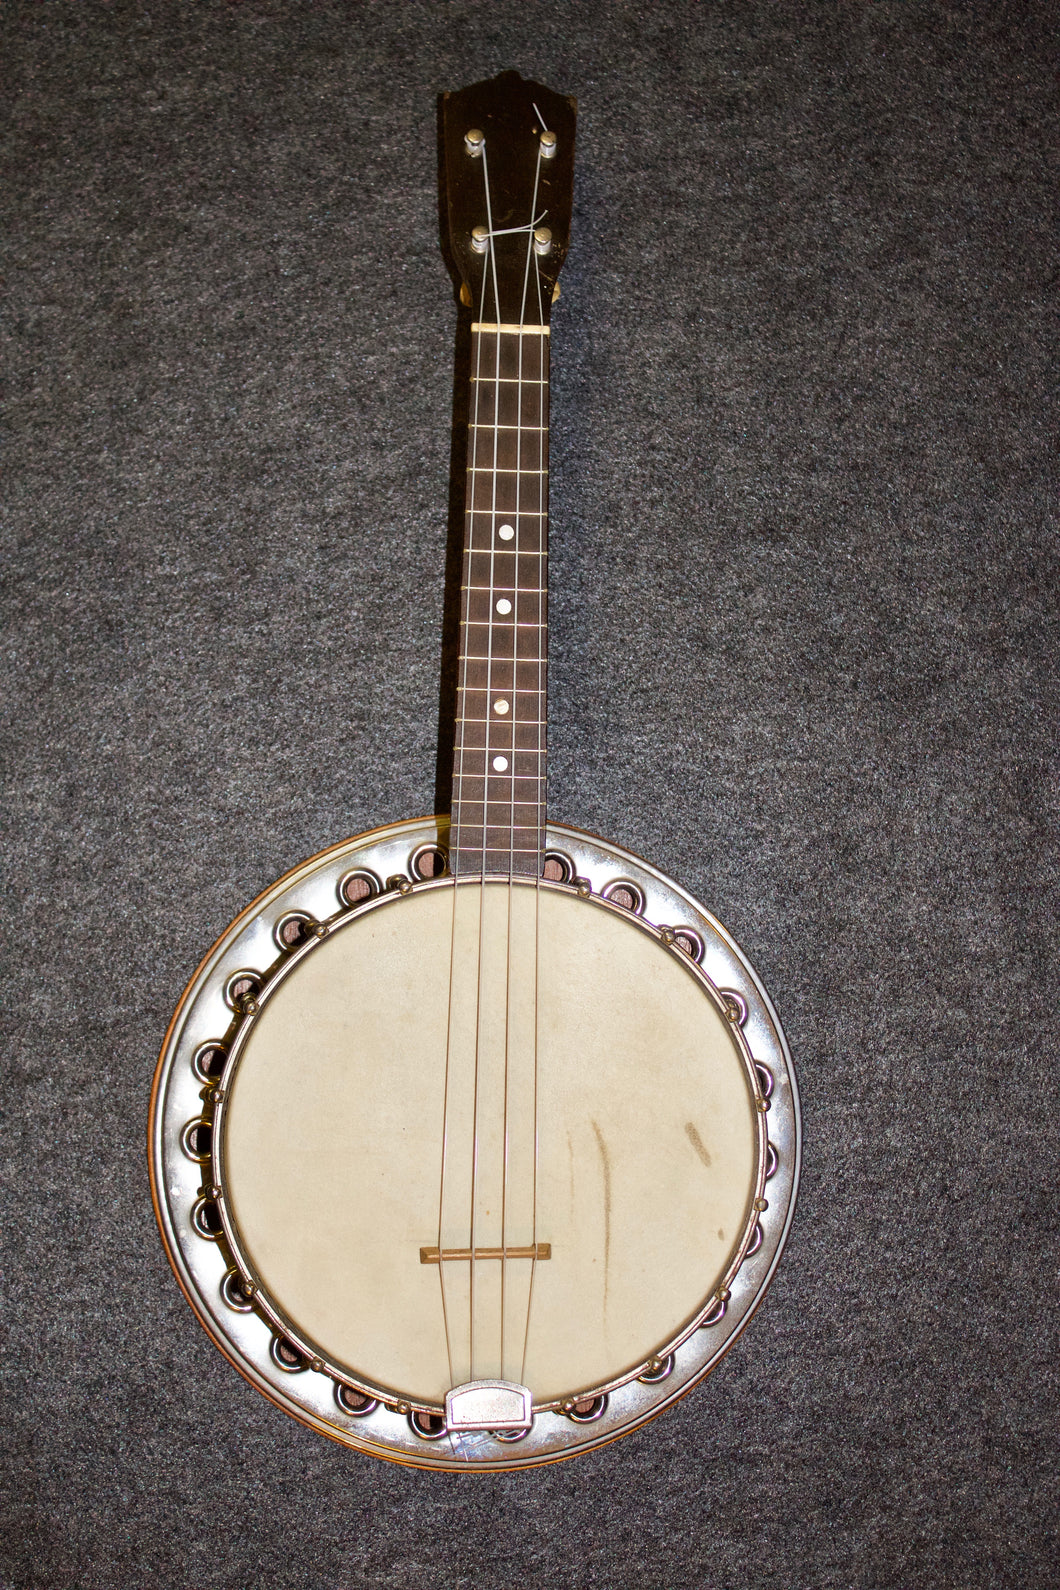 Stromberg Voisenet Resonator Banjo-Ukulele c. 1920 - Jakes Main Street Music